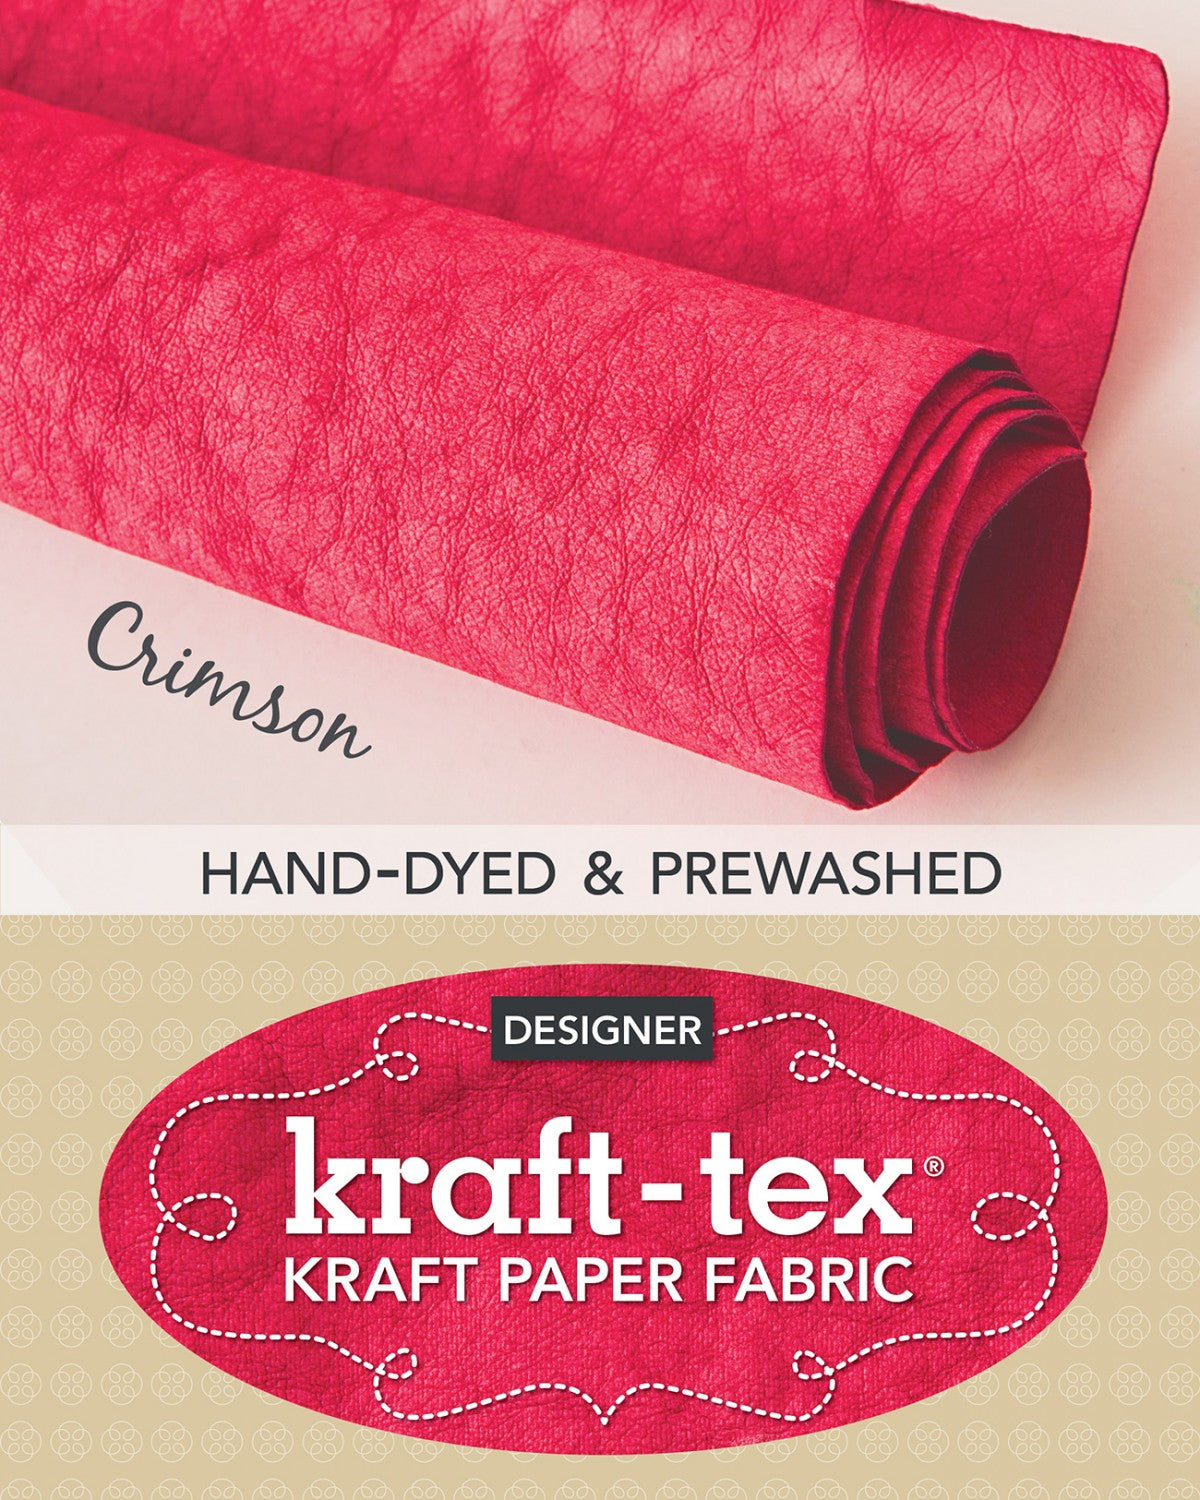 Kraft-Tex Roll Crimson Hand-Dyed & Prewashed